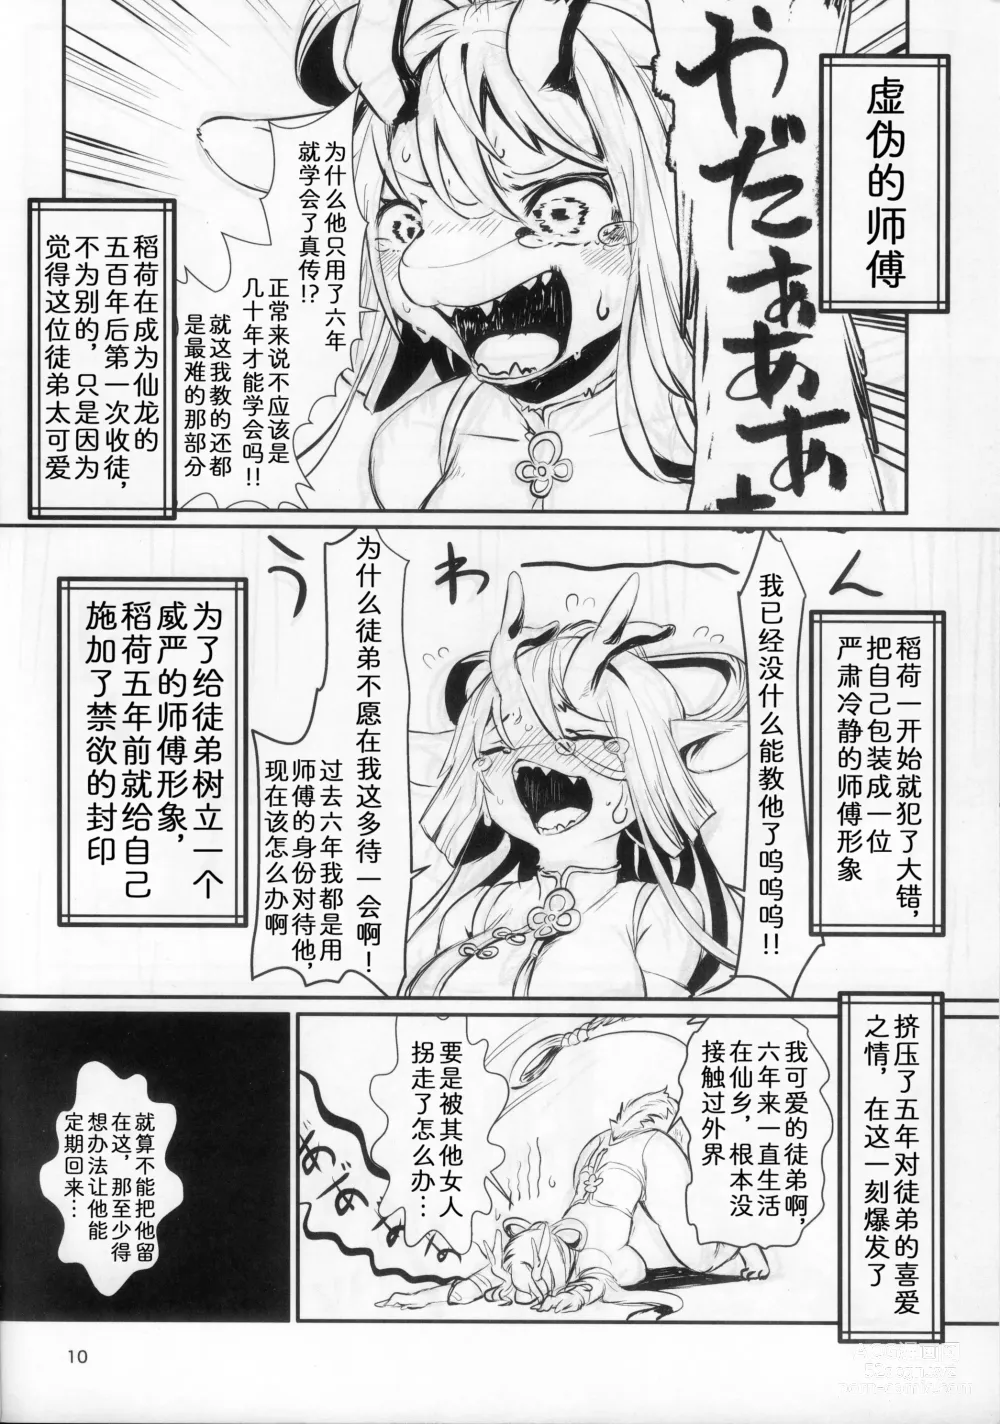 Page 9 of doujinshi 娇声，幽谷飘香